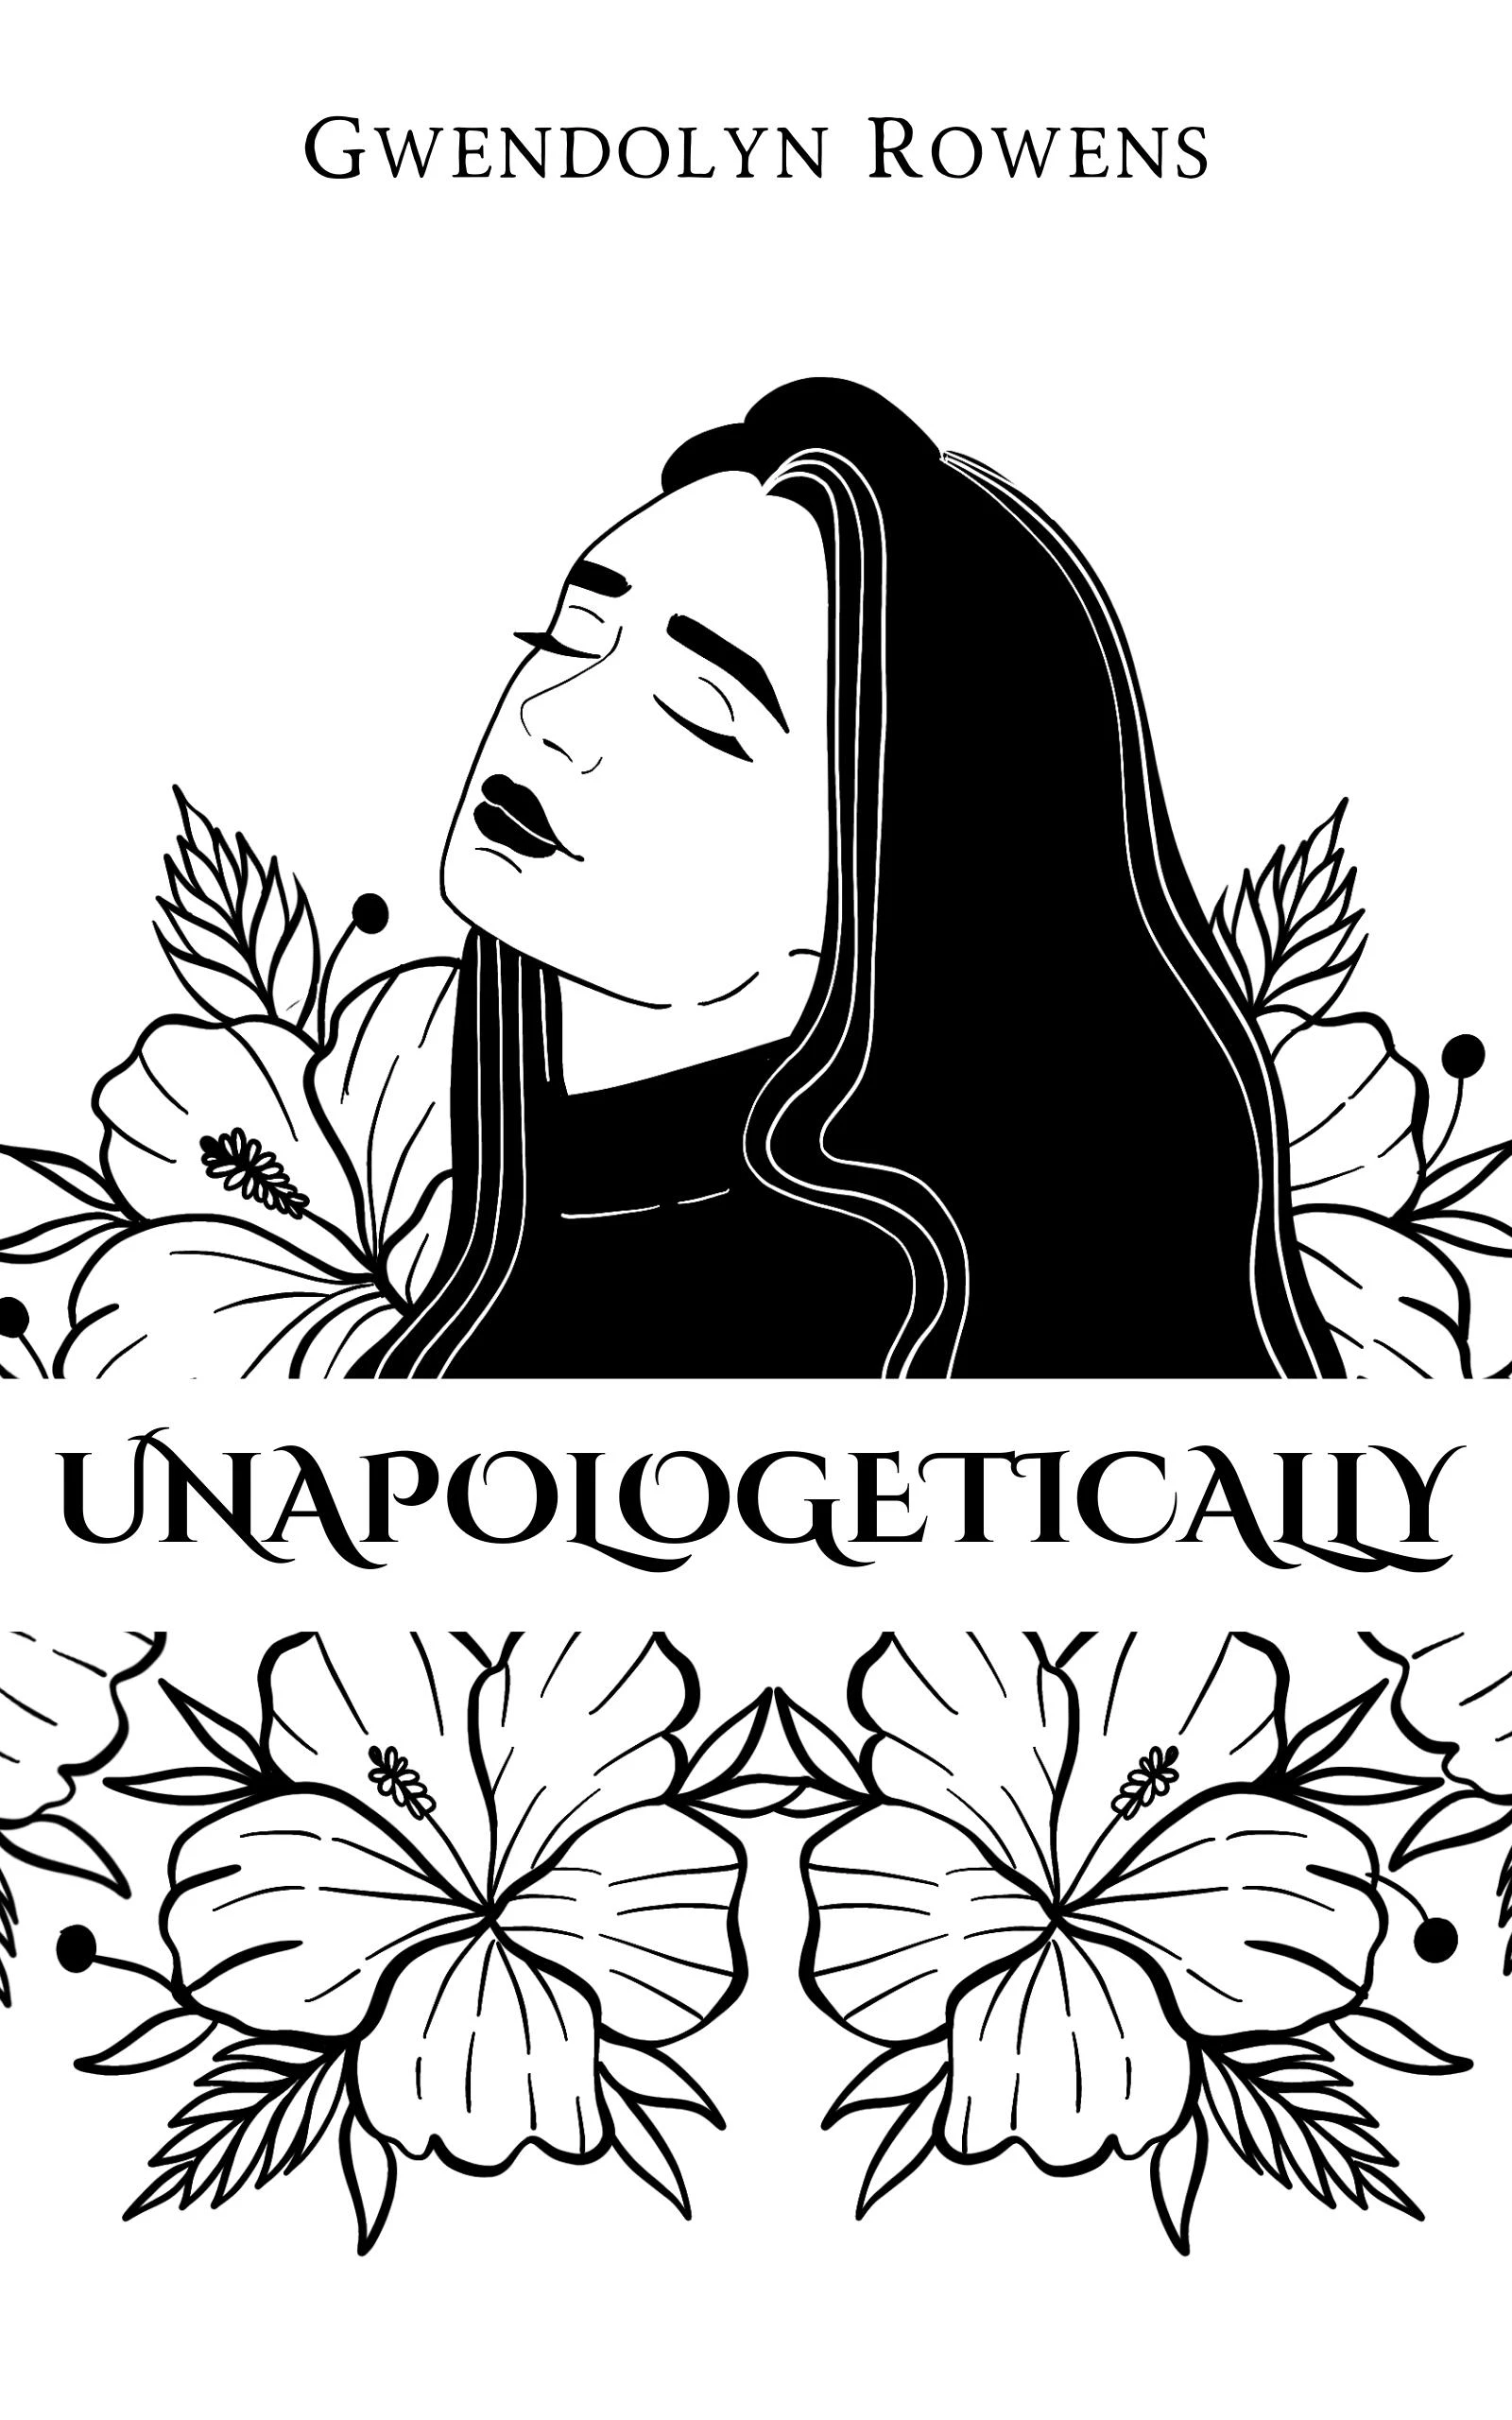 Unapologetically